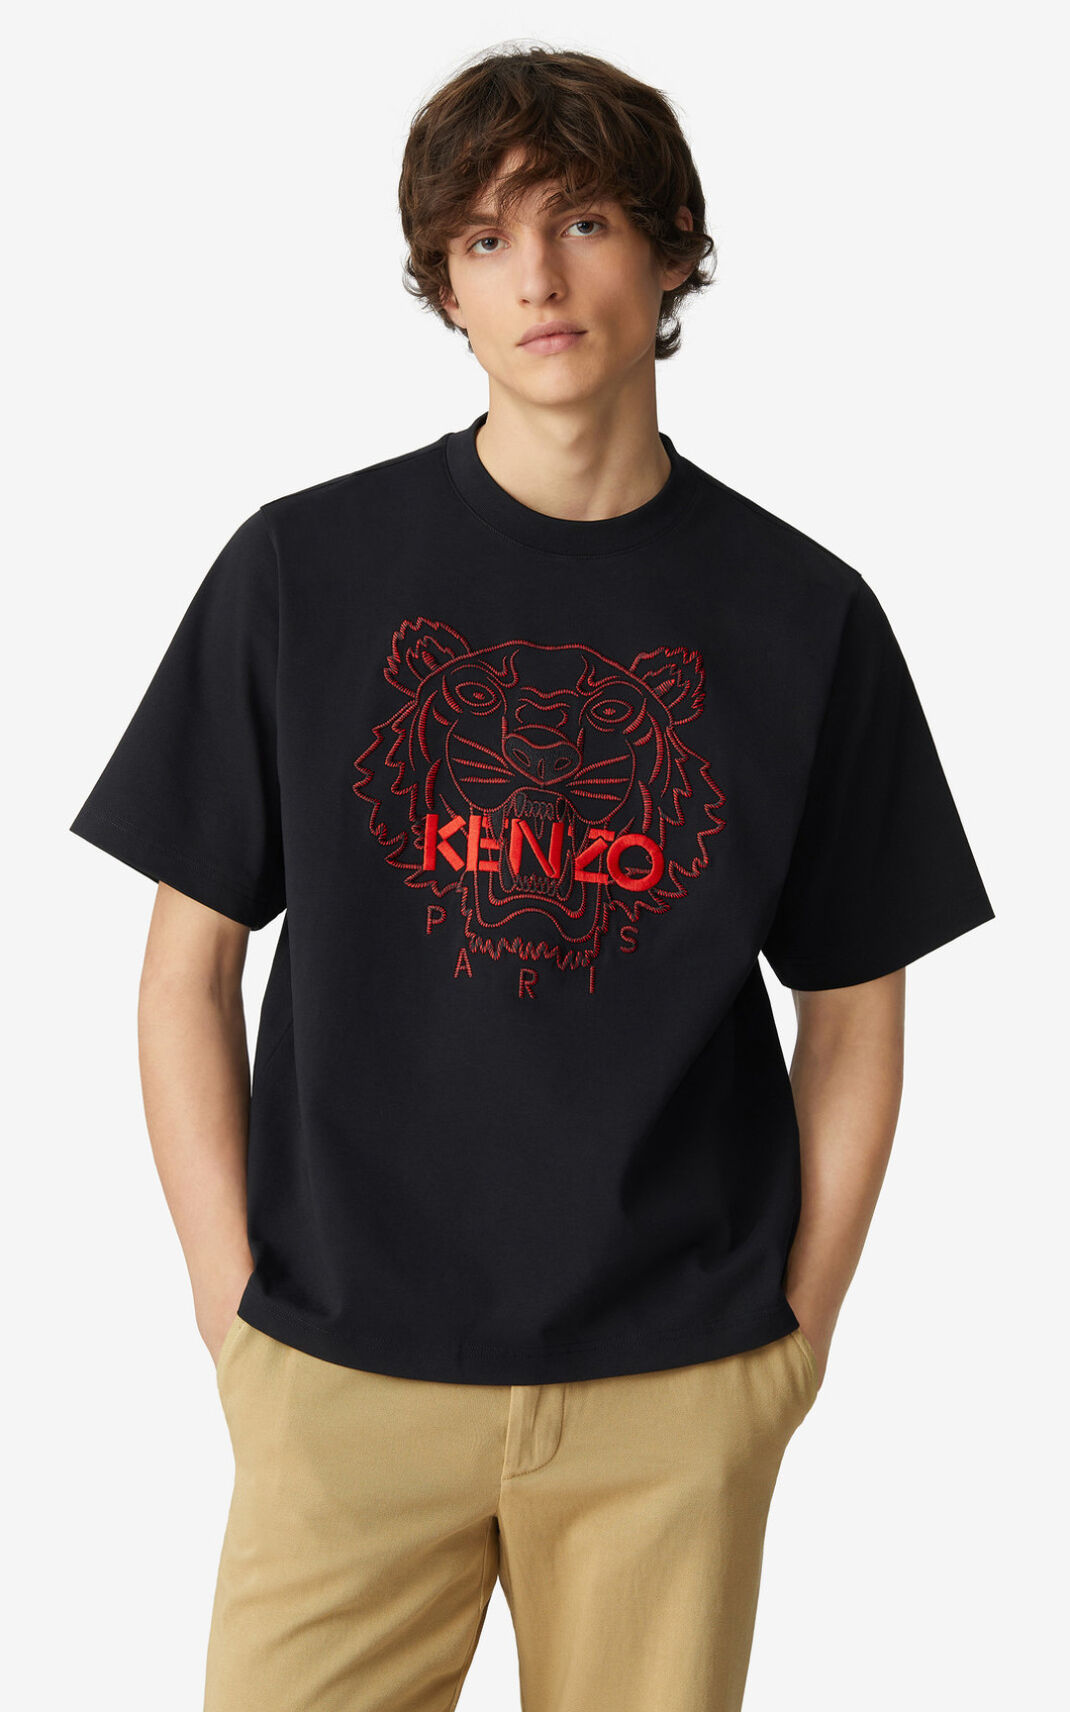 Camisetas Kenzo Tiger loose fitting Hombre Negras - SKU.6100600